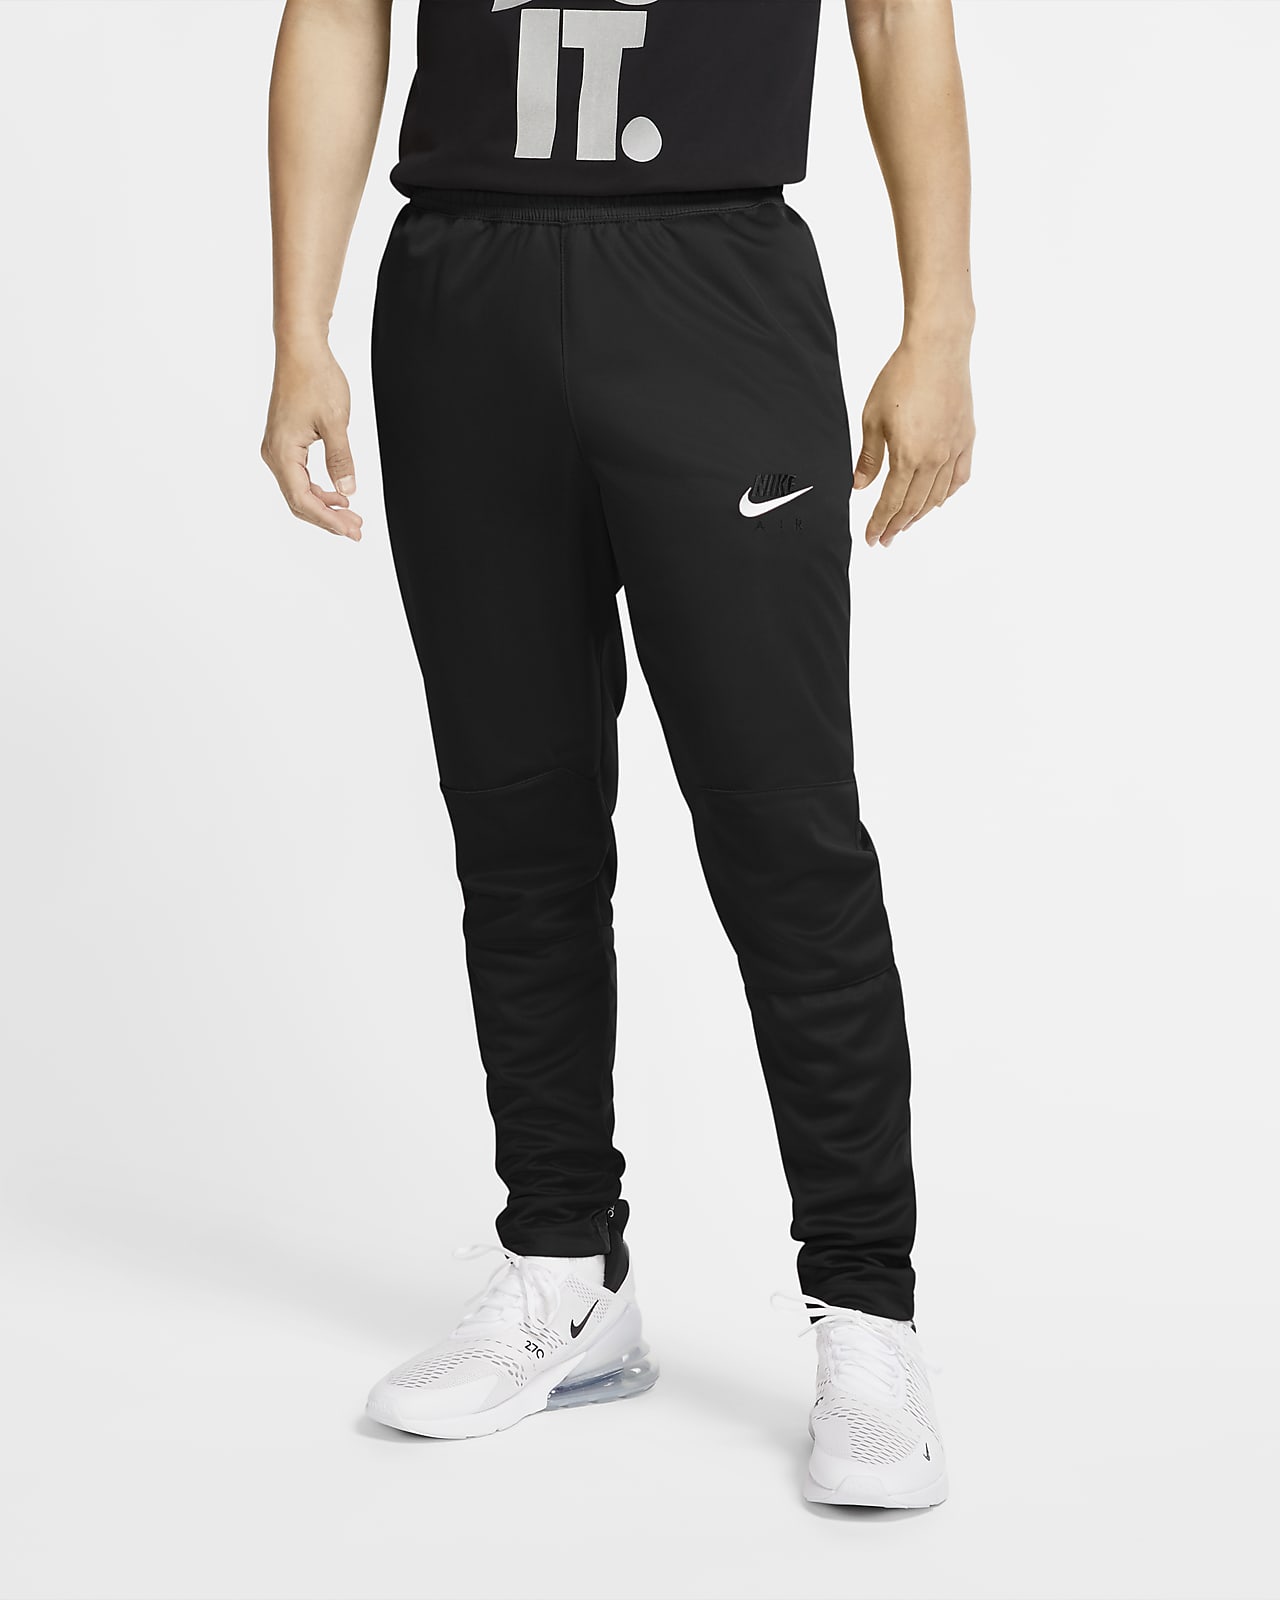 Nike Air Men's Trousers. Nike NZ